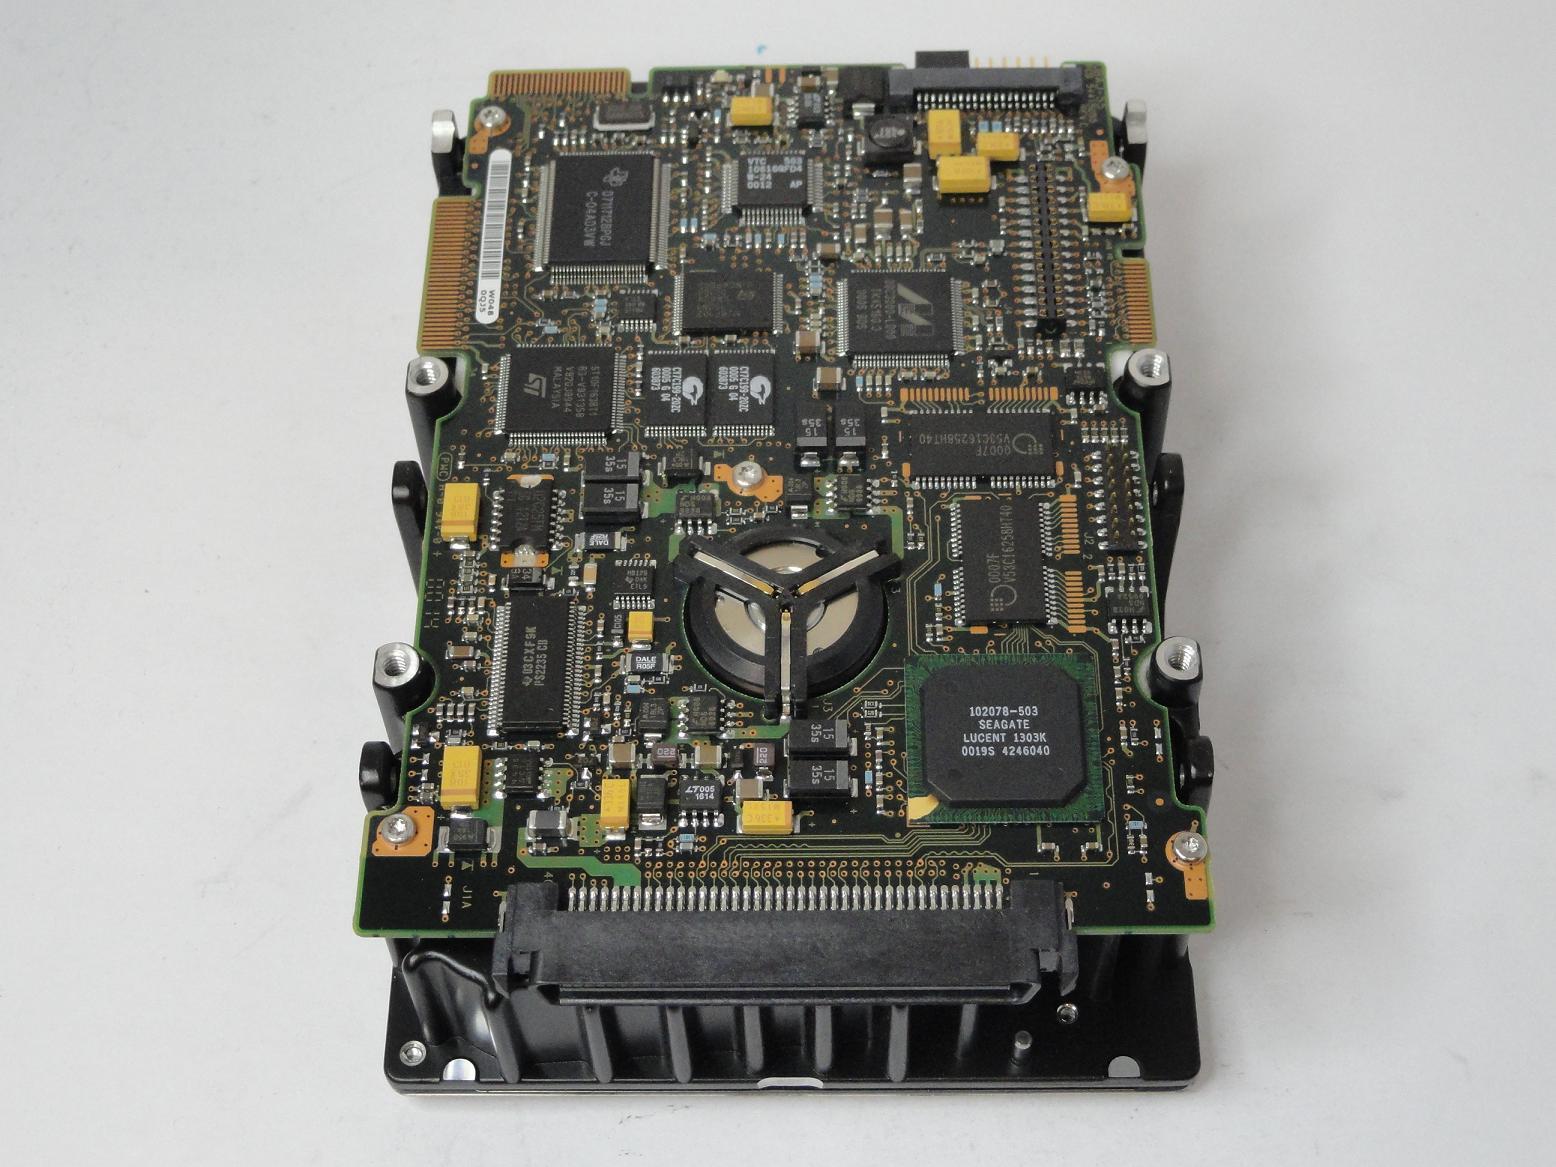 PR04515_9L7006-043_Seagate HP 36.4GB SCSI 80 Pin 10Krpm 3.5in HDD - Image2